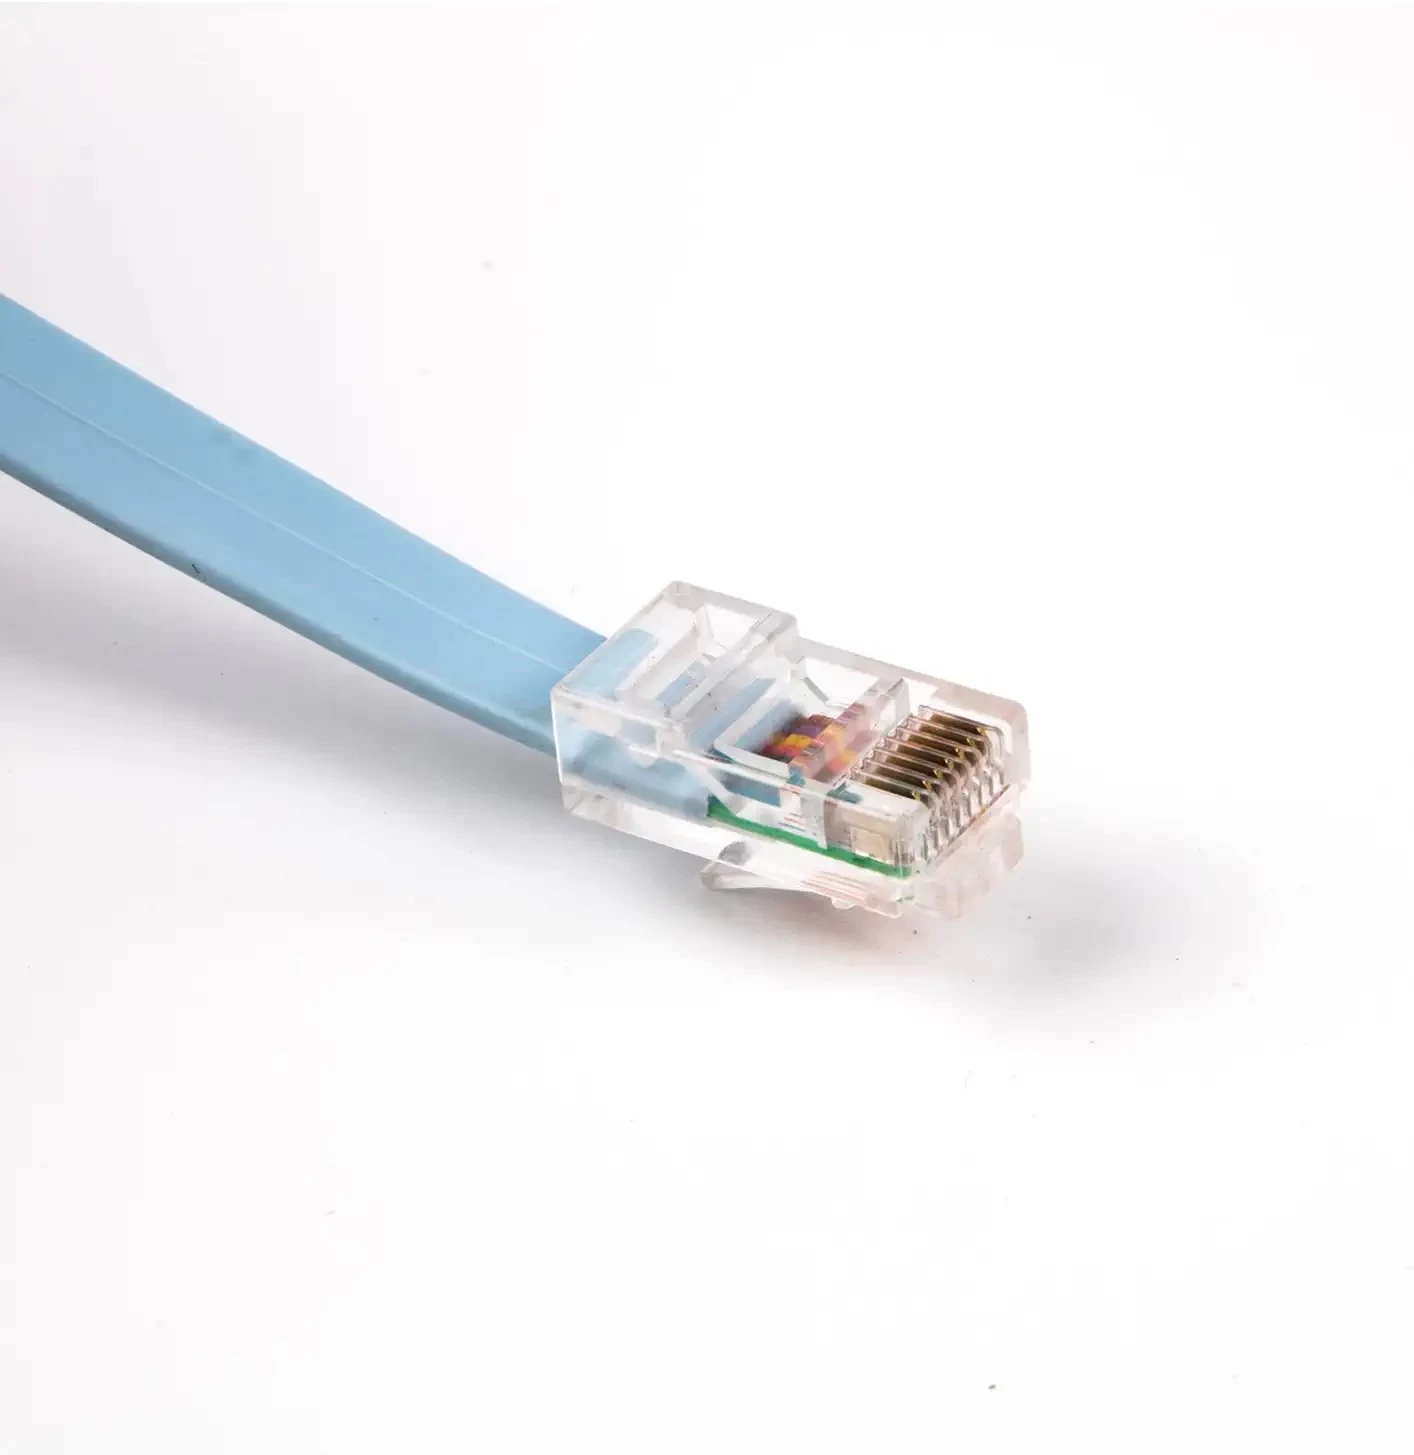 China Vervangende USB Console Kabel voor Cisco Router Kabel Ftdi Chipset USB naar Rj45 Adapter Kabel voor Laptops in Windows, Mac, Linux fabrikant